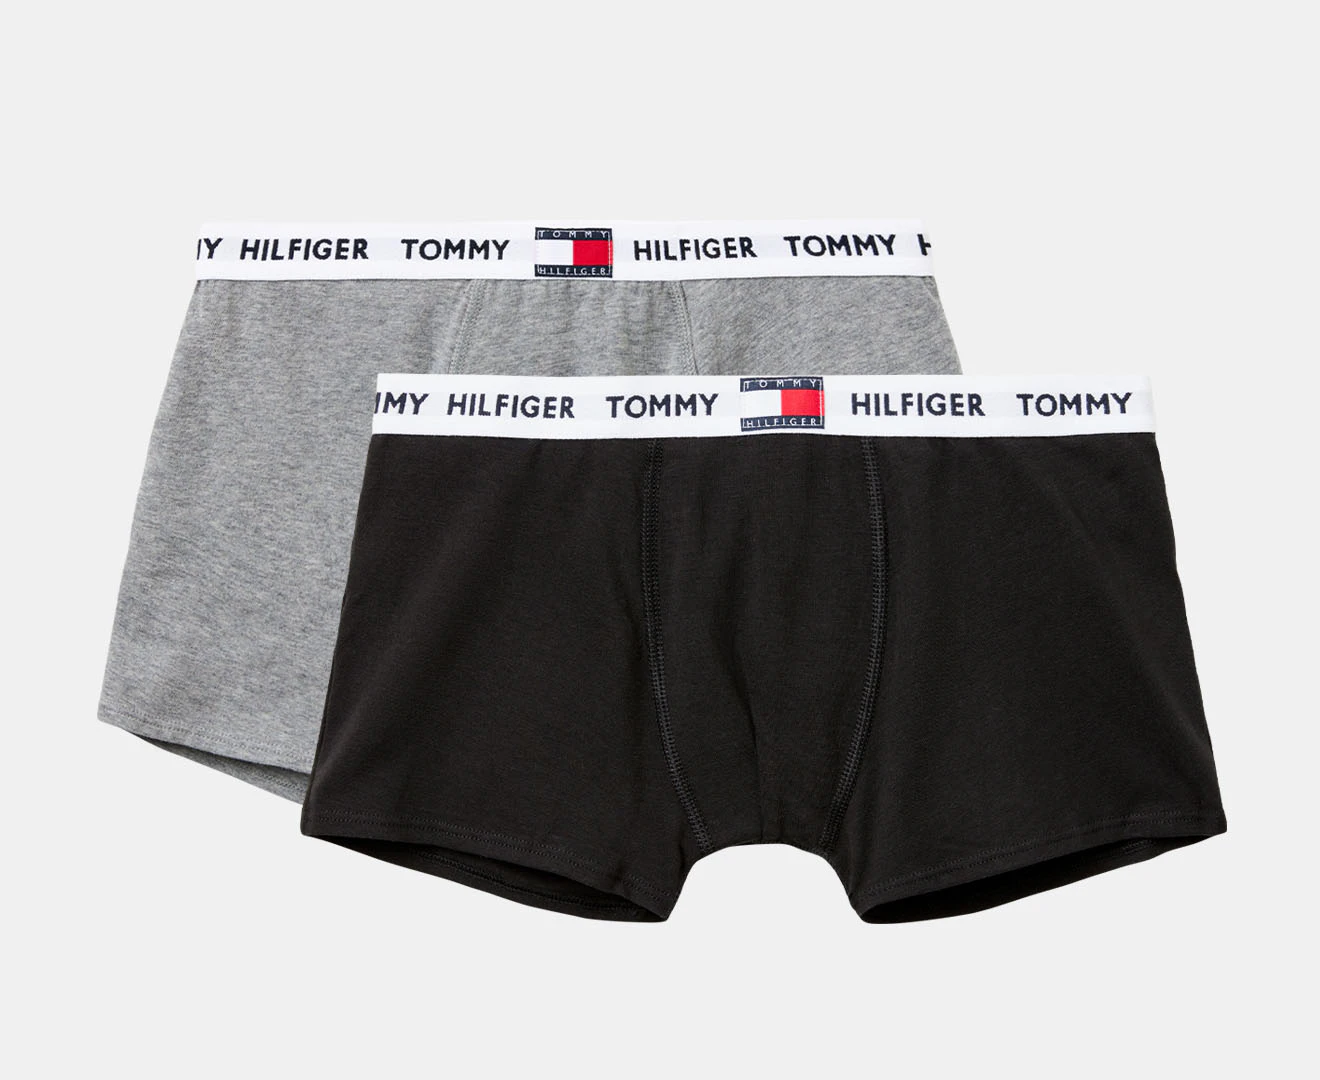 Tommy Hilfiger - Boys Navy Blue Cotton Boxer Shorts (2 Pack)